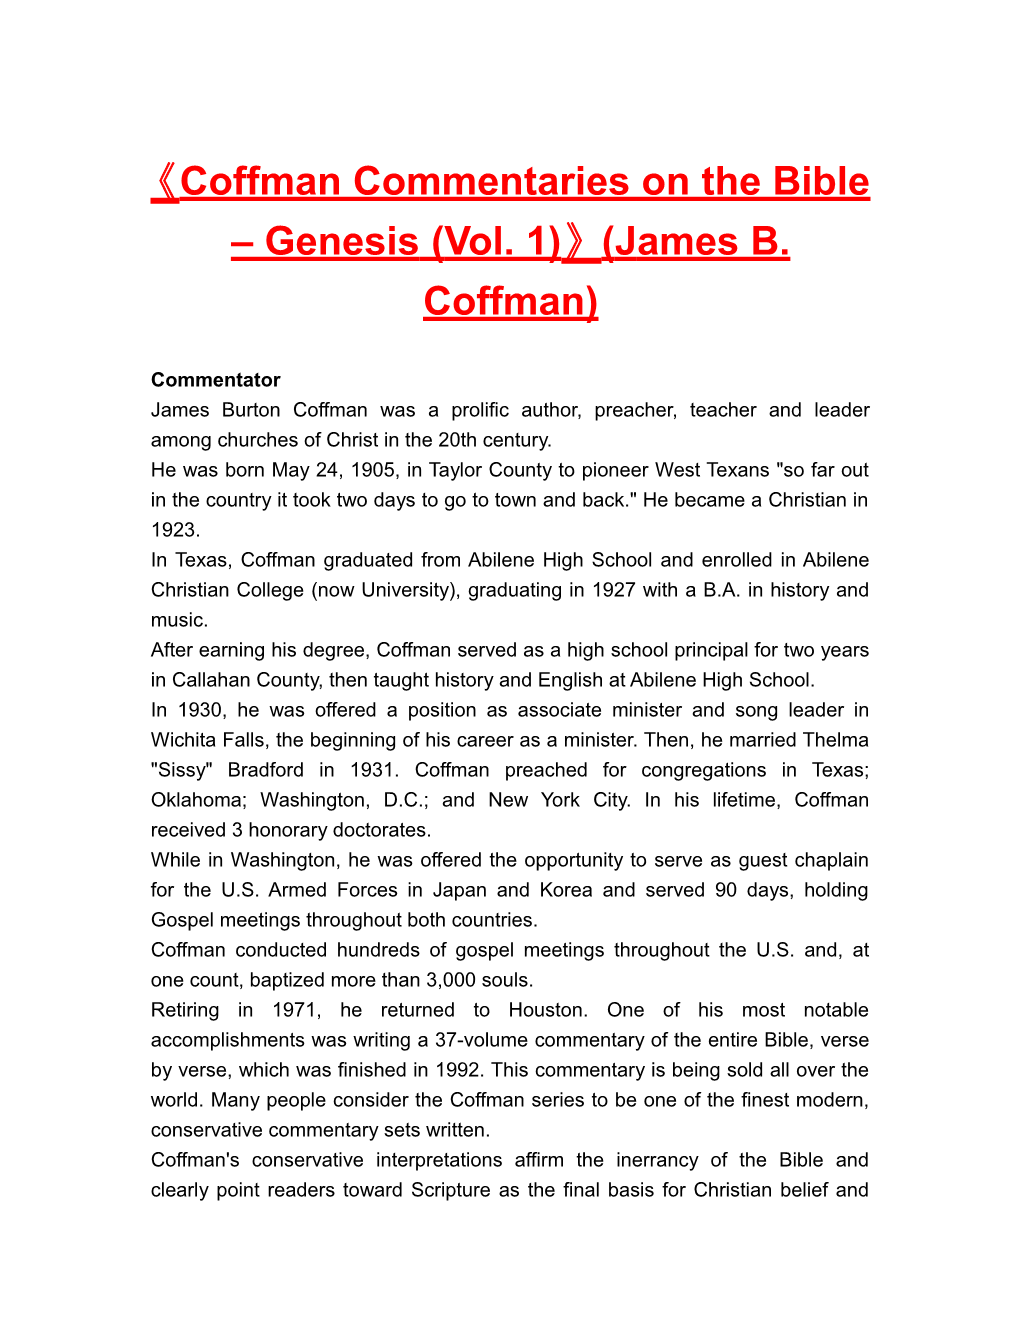 Coffman Commentaries on the Bible Genesis (Vol. 1) (James B. Coffman)